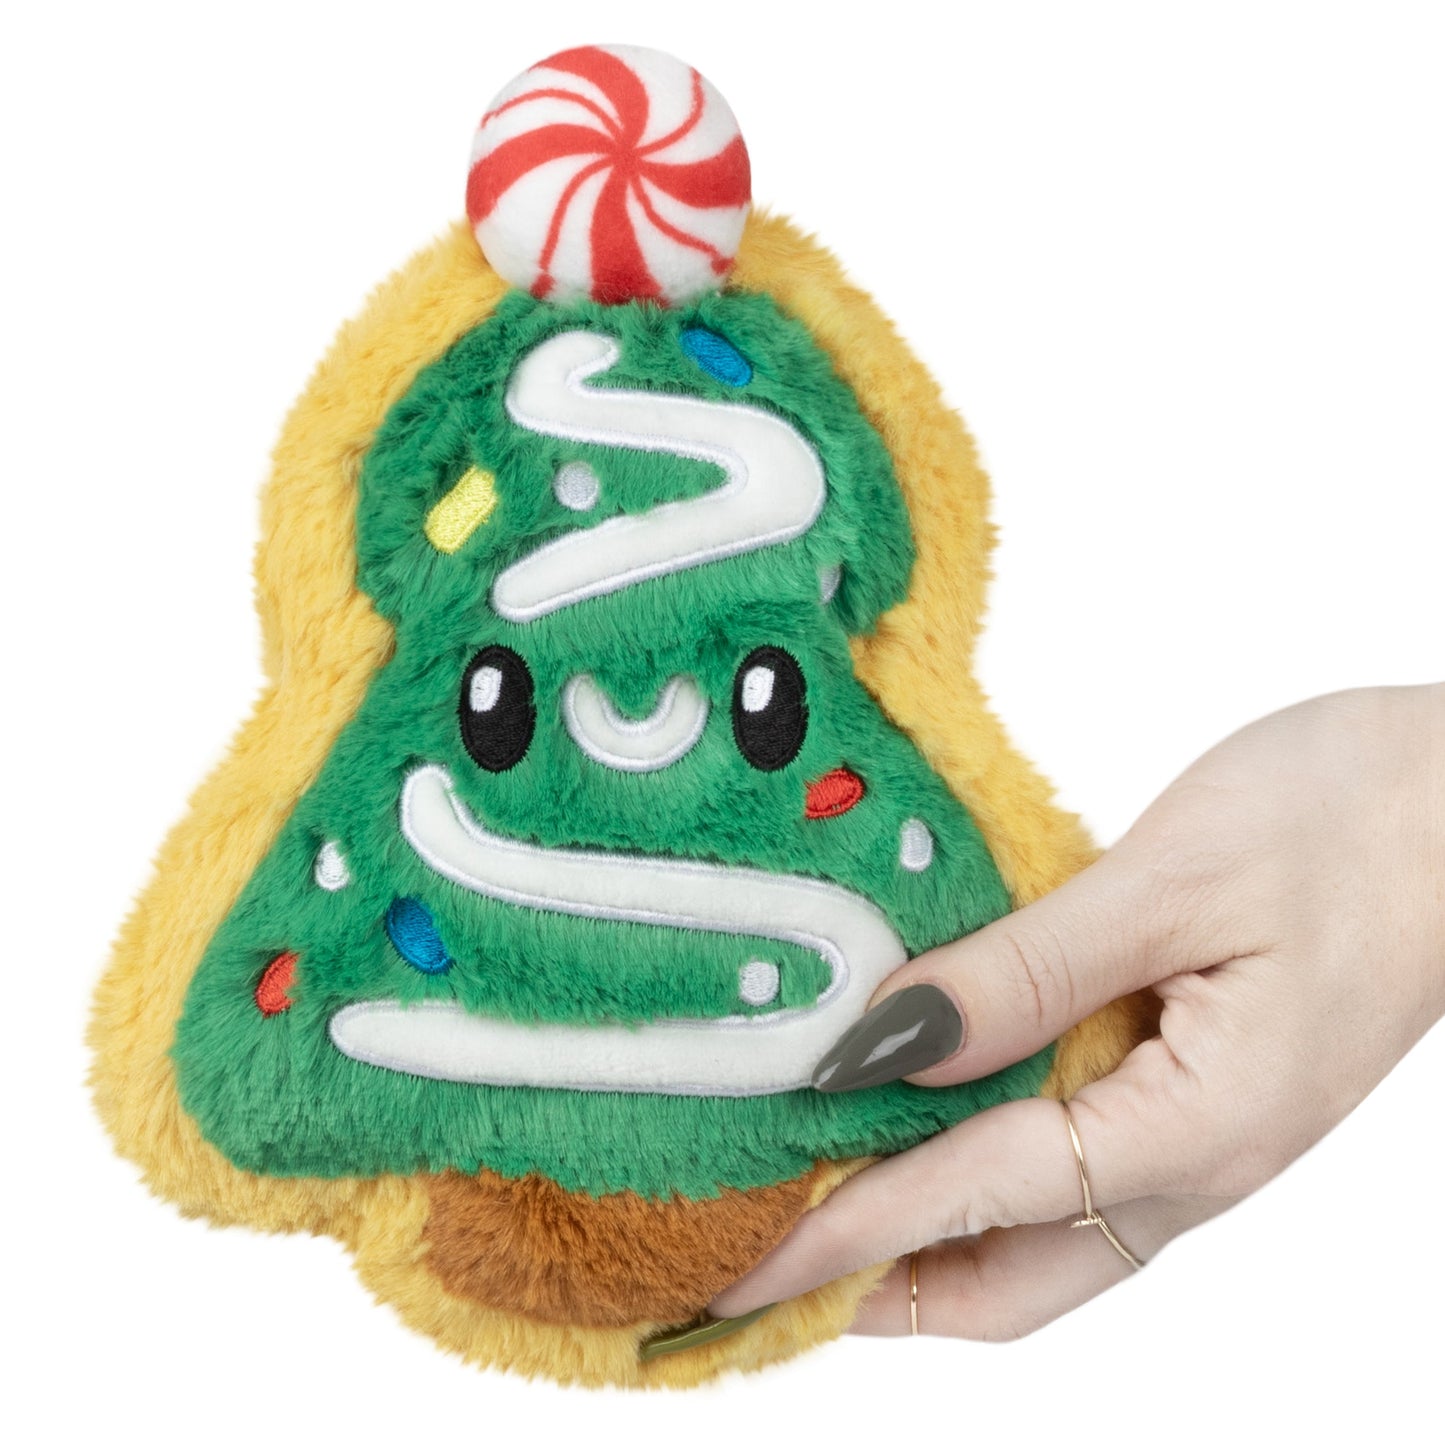 Snacker Christmas Tree Cookie